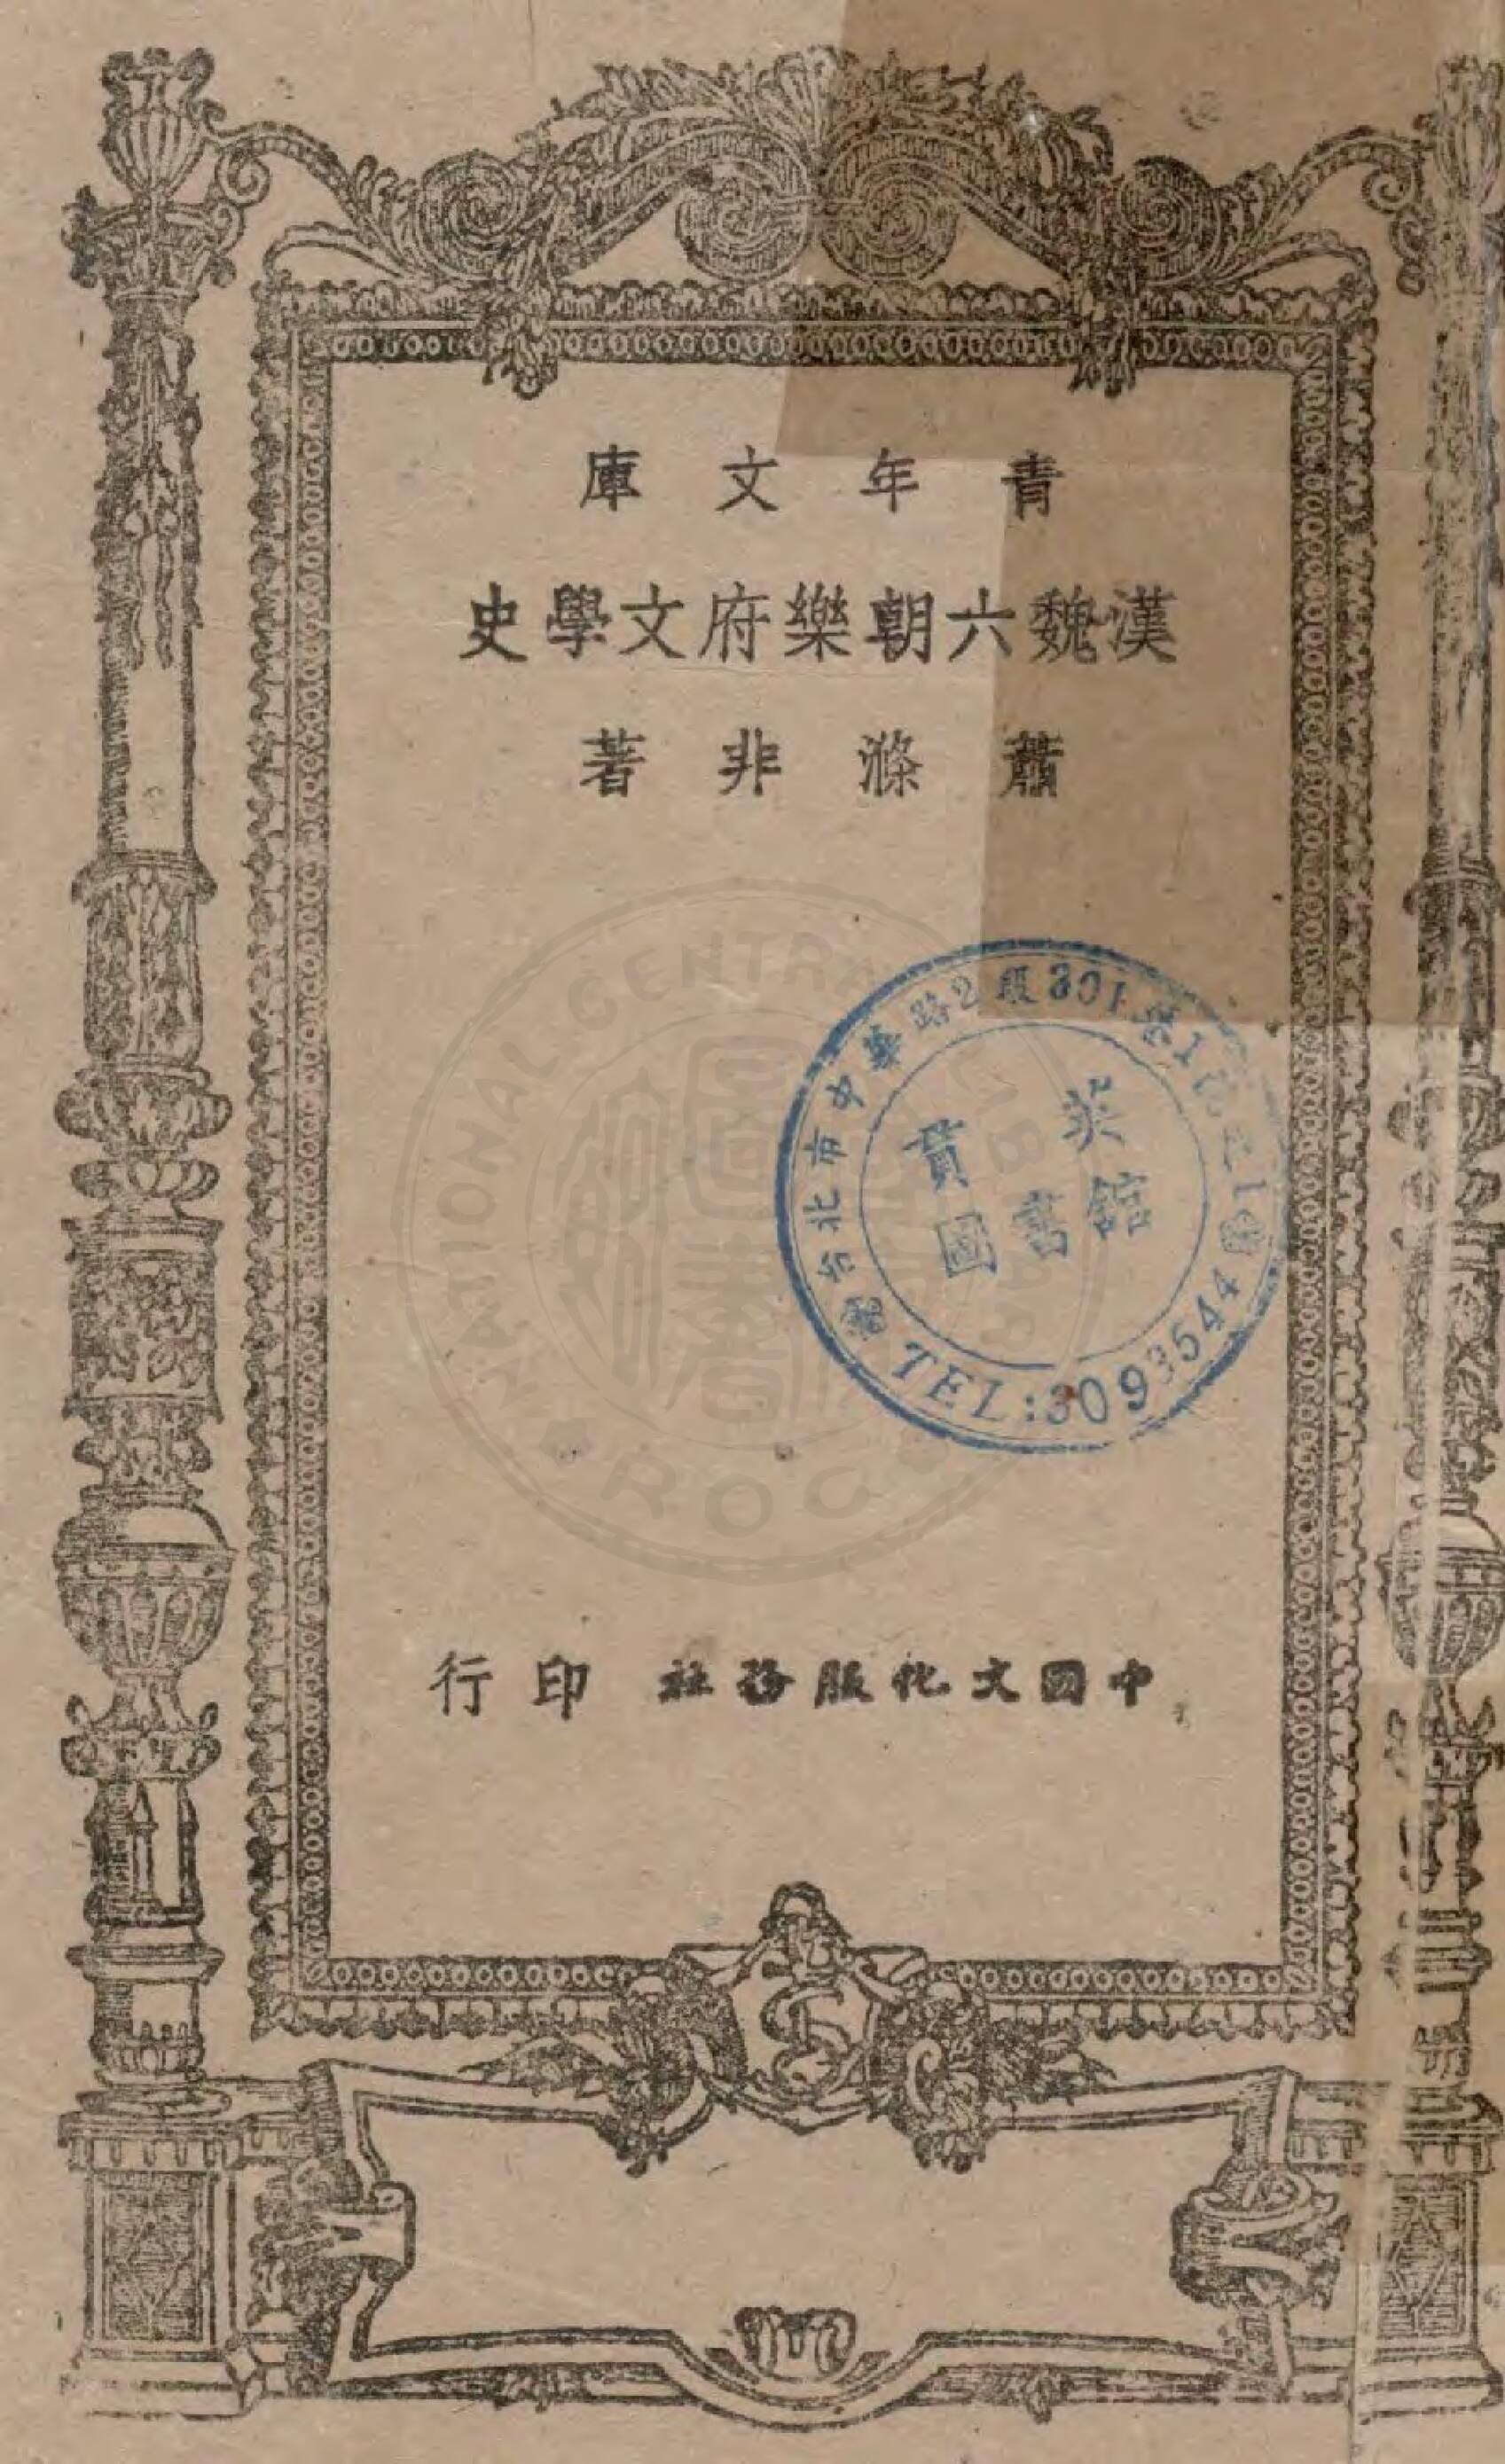 File:NCL-000791456 漢魏六朝樂府文學史.pdf - Wikimedia Commons